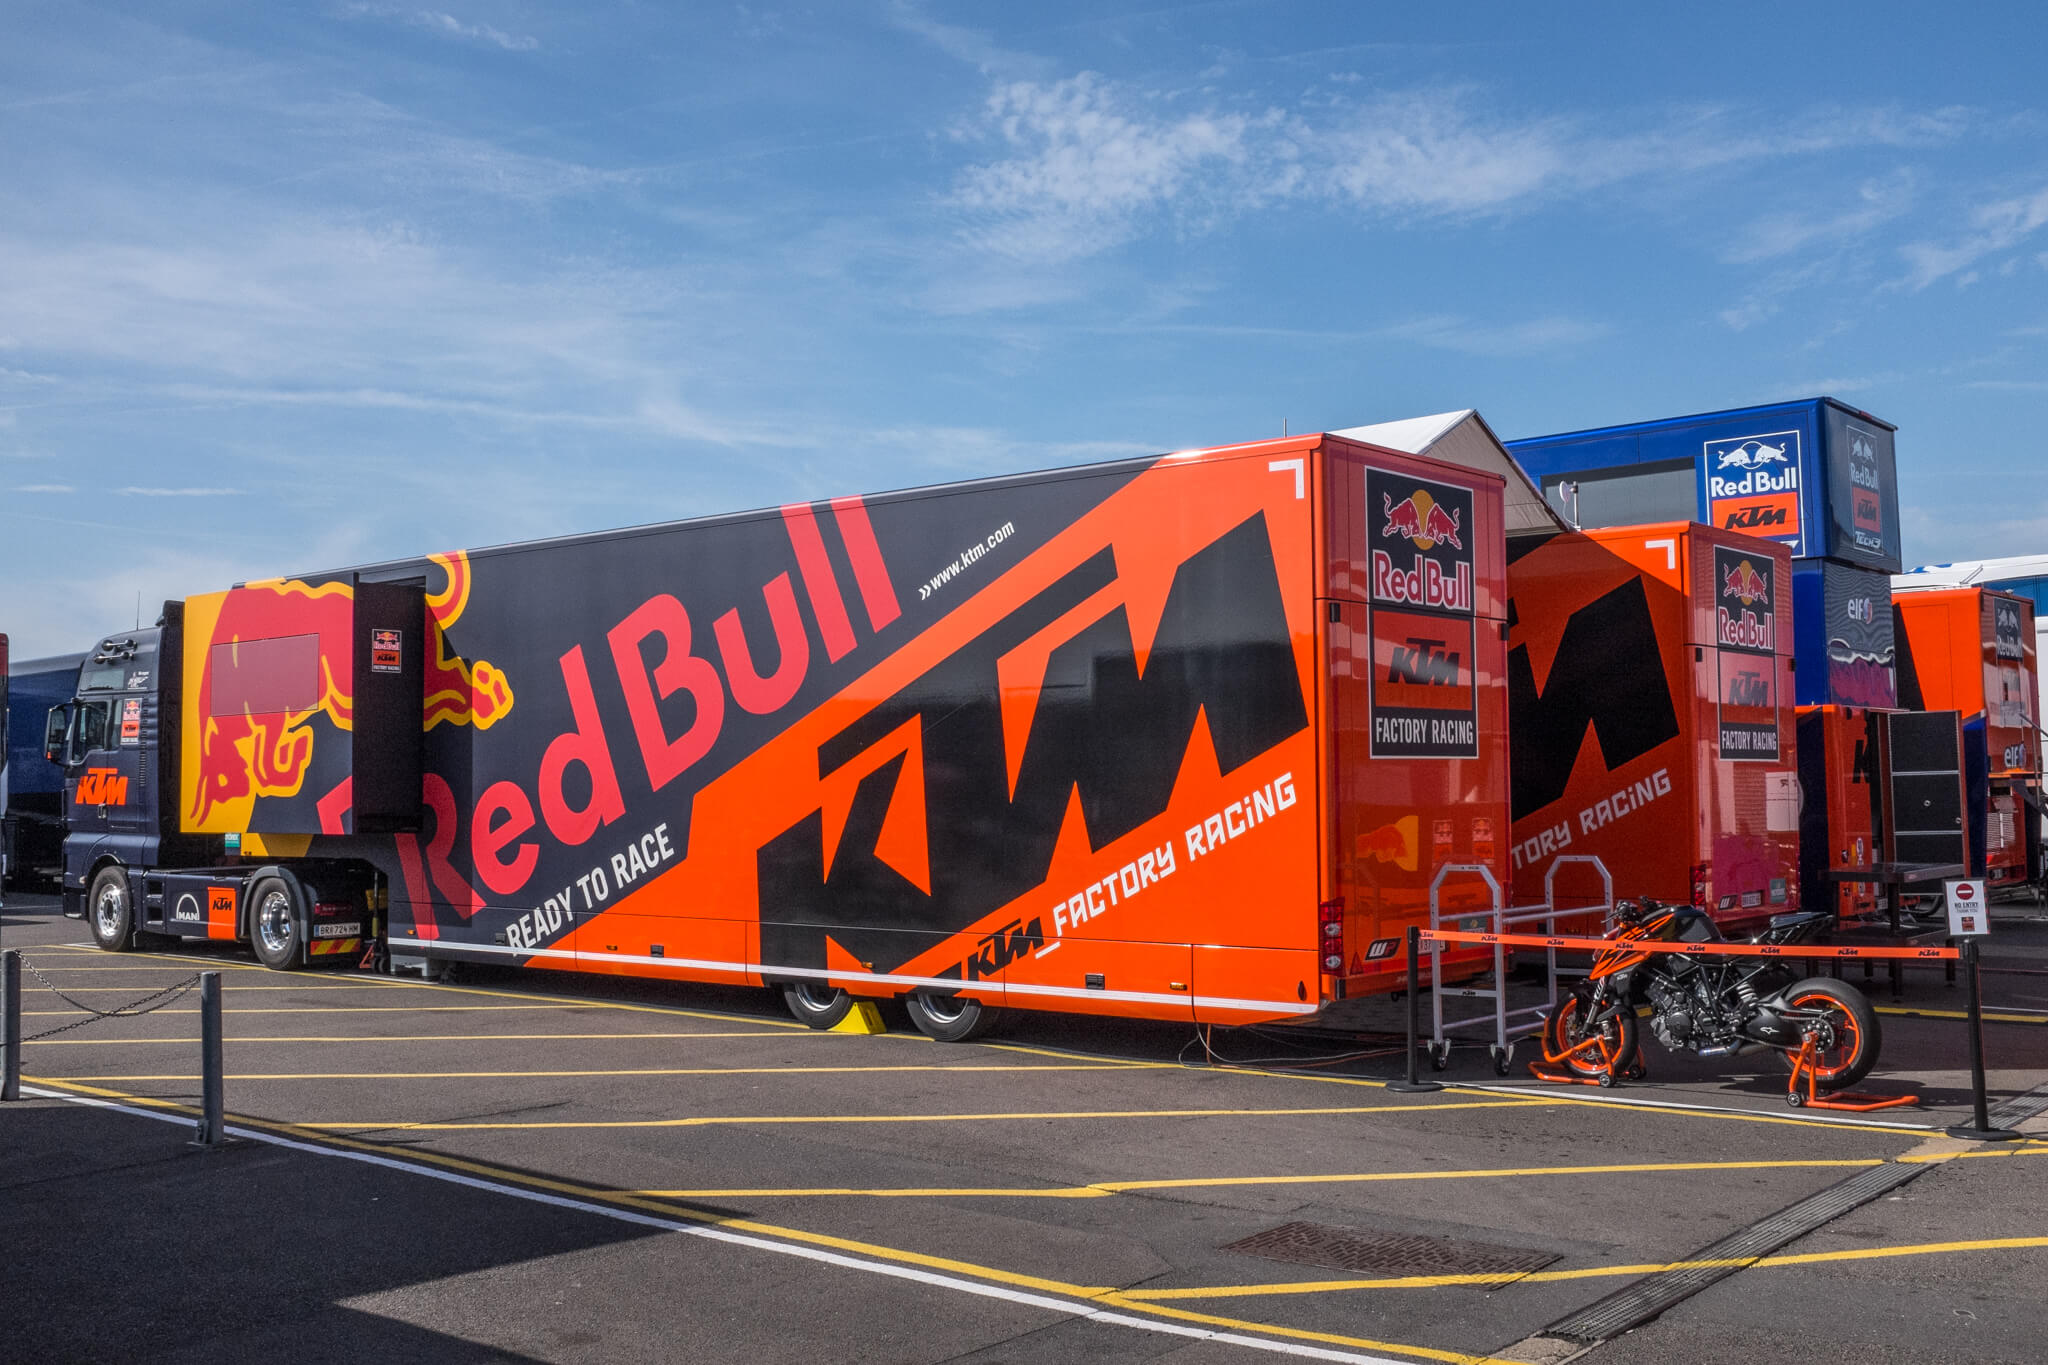 The Red Bull KTM trucks at Silverstone MotoGP 2019 Paddock